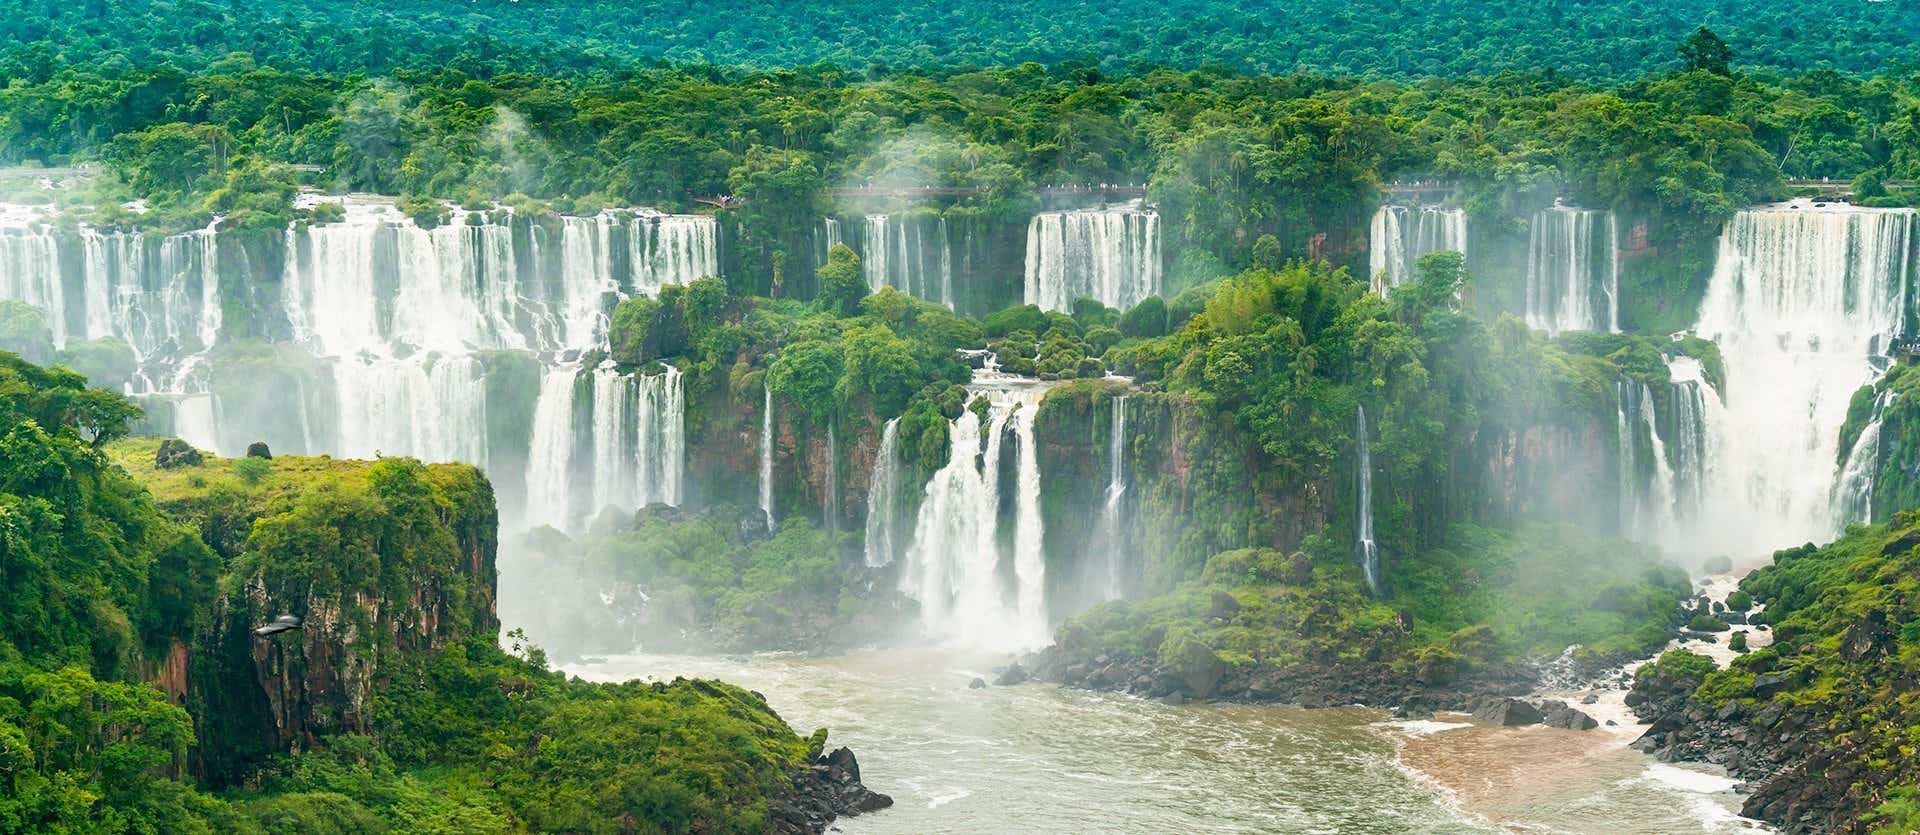 Iguazu <span class="iconos separador"></span> Brazil